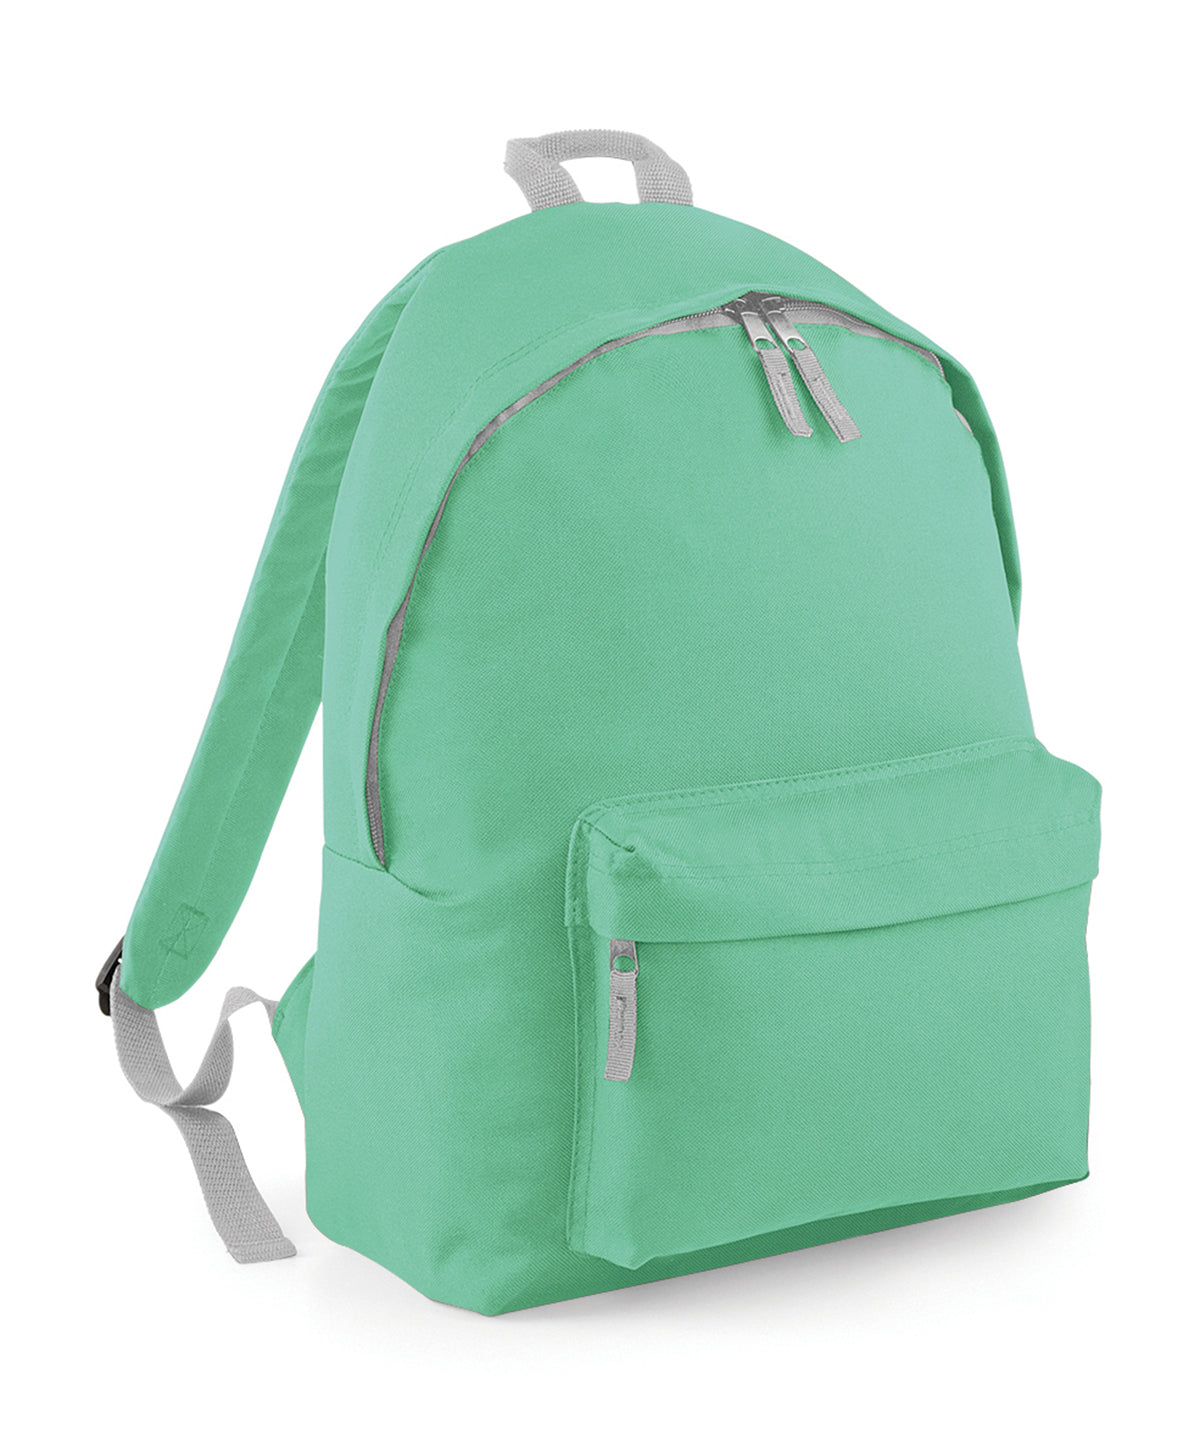 Personalised Bags - Mint Bagbase Original fashion backpack